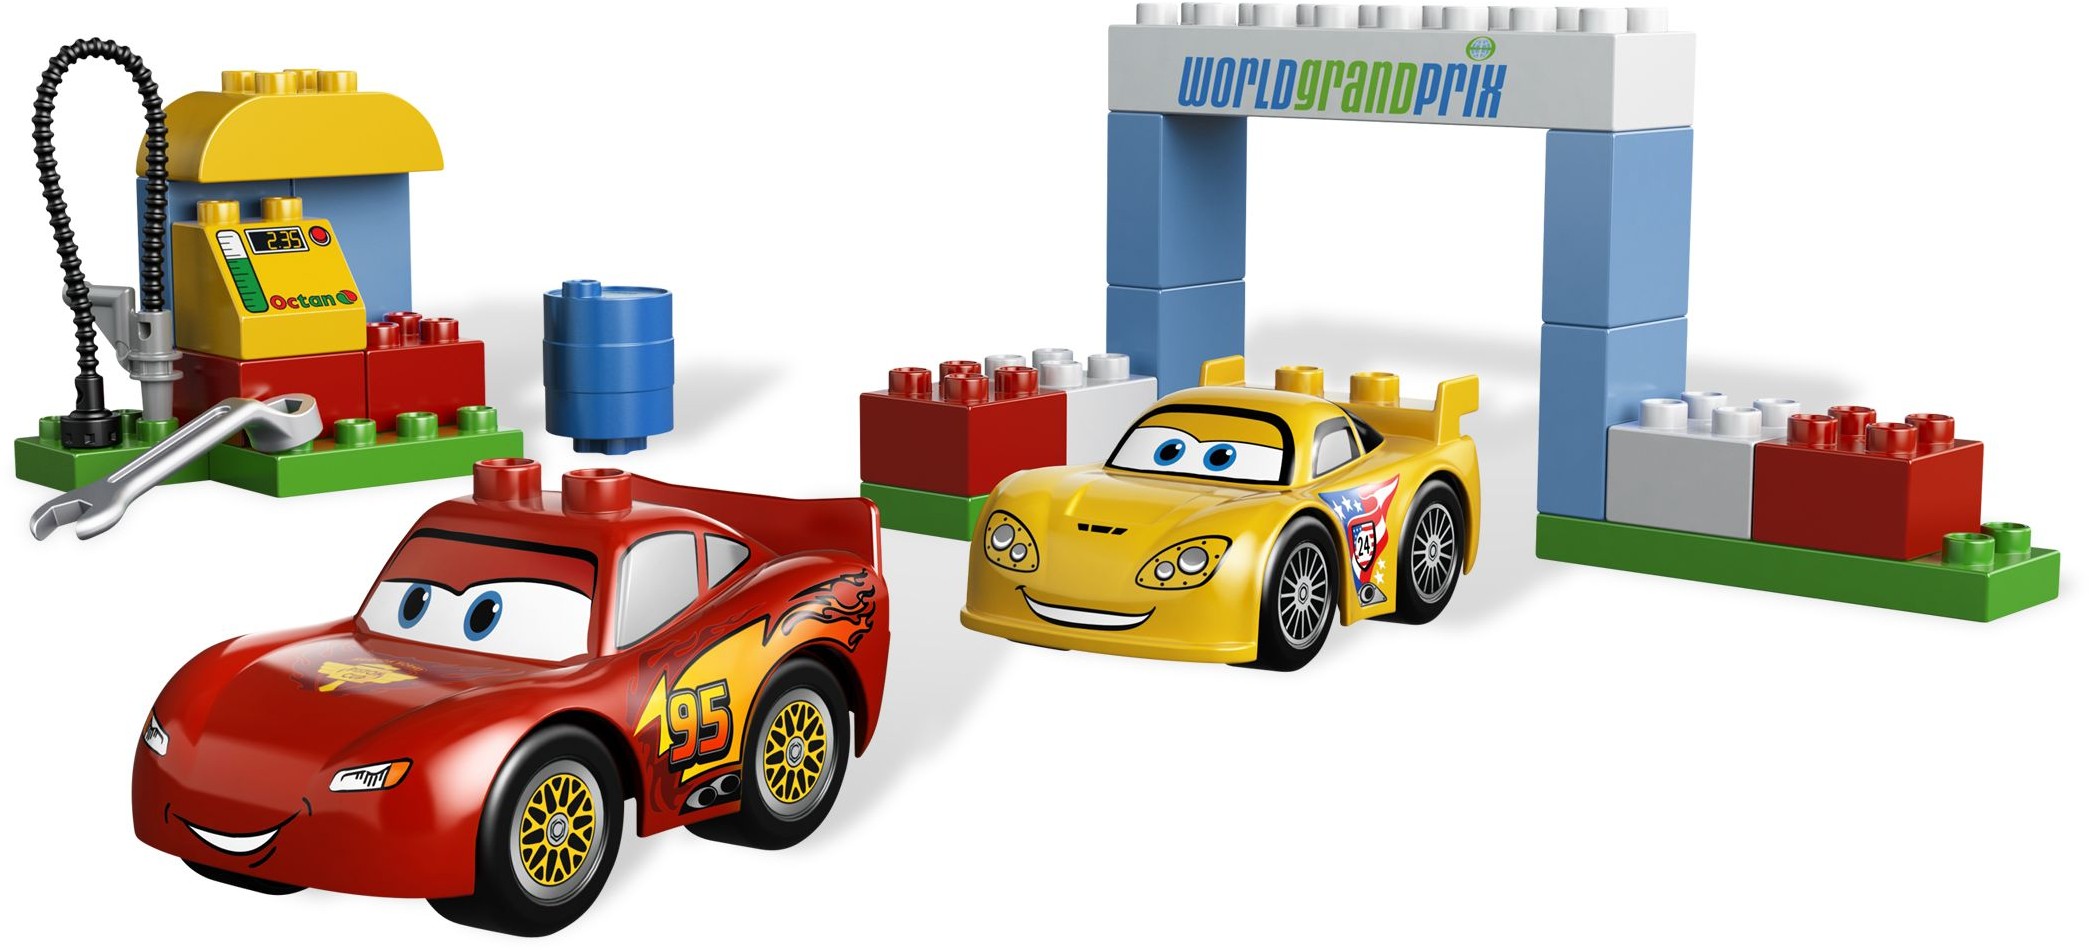 LEGO Cars Brickset